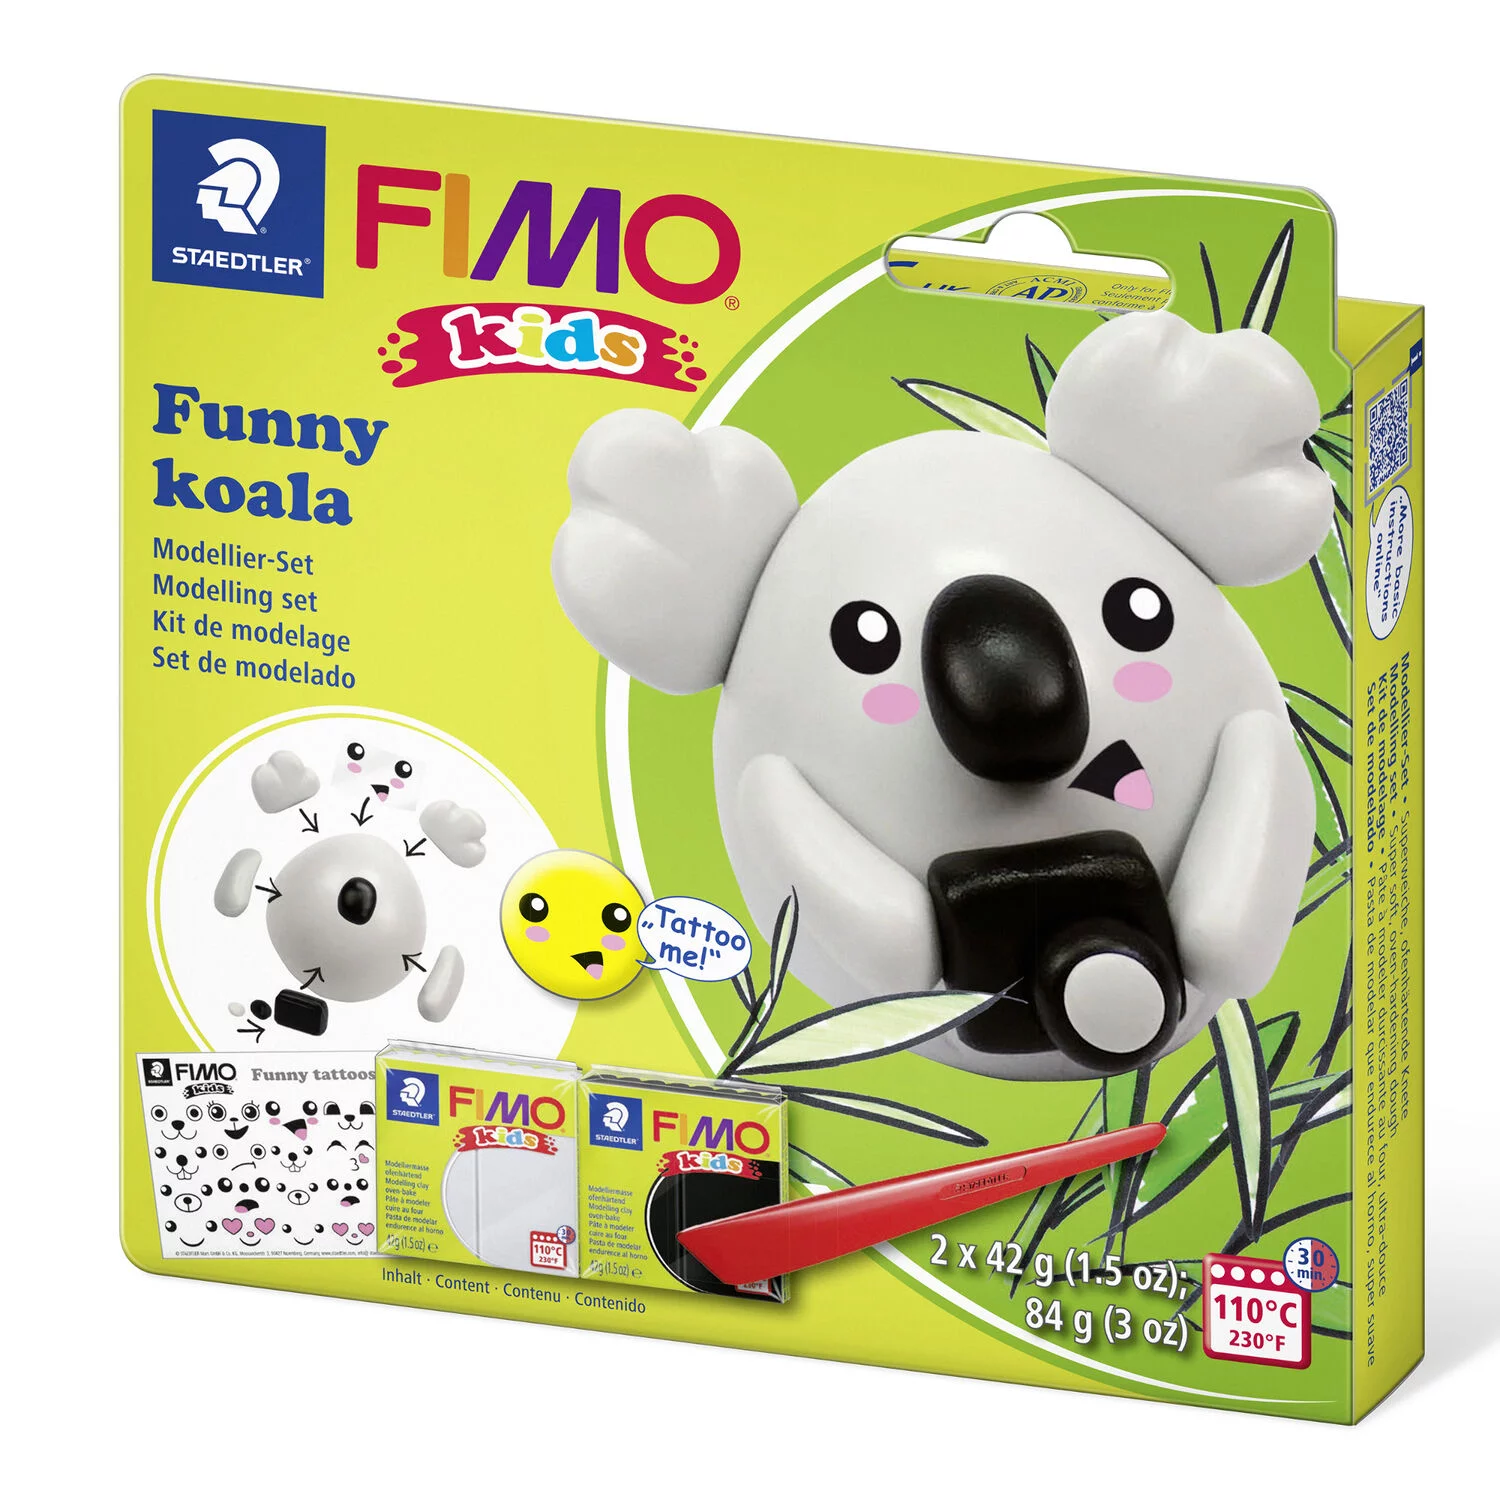 STAEDTLER 8035 19 - Fimo kids Set FUNNY Koala - ofenhärtende Modelliermasse, 2x42g